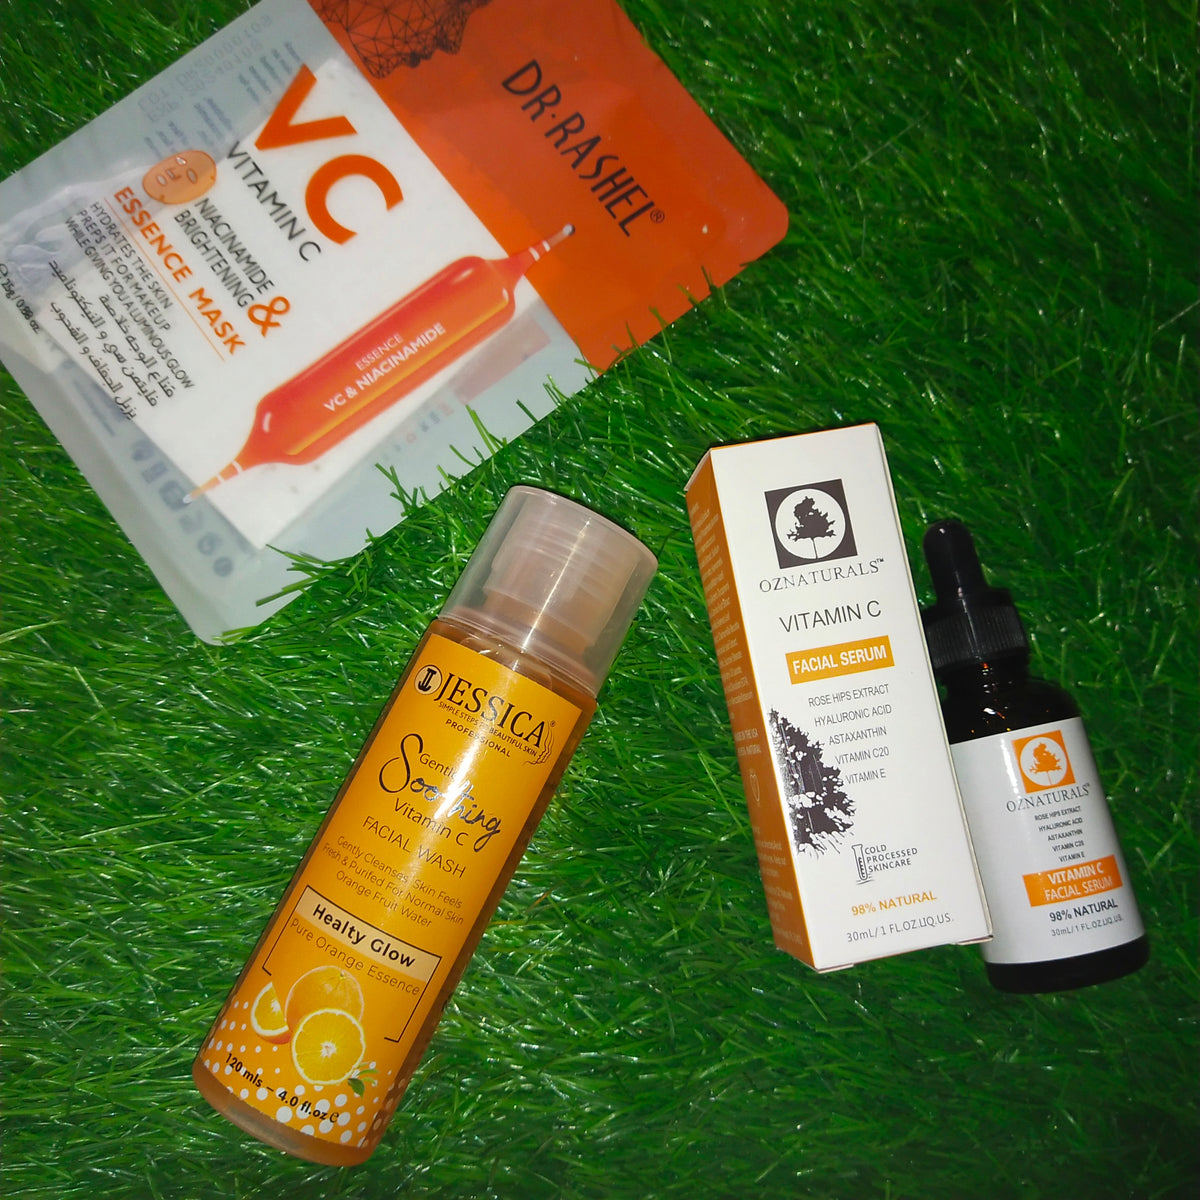 Oz Natural Vitamin C Face Serum + Jessica Facial Wash + Dr Rashel Vitamin C Essence Sheet Mask